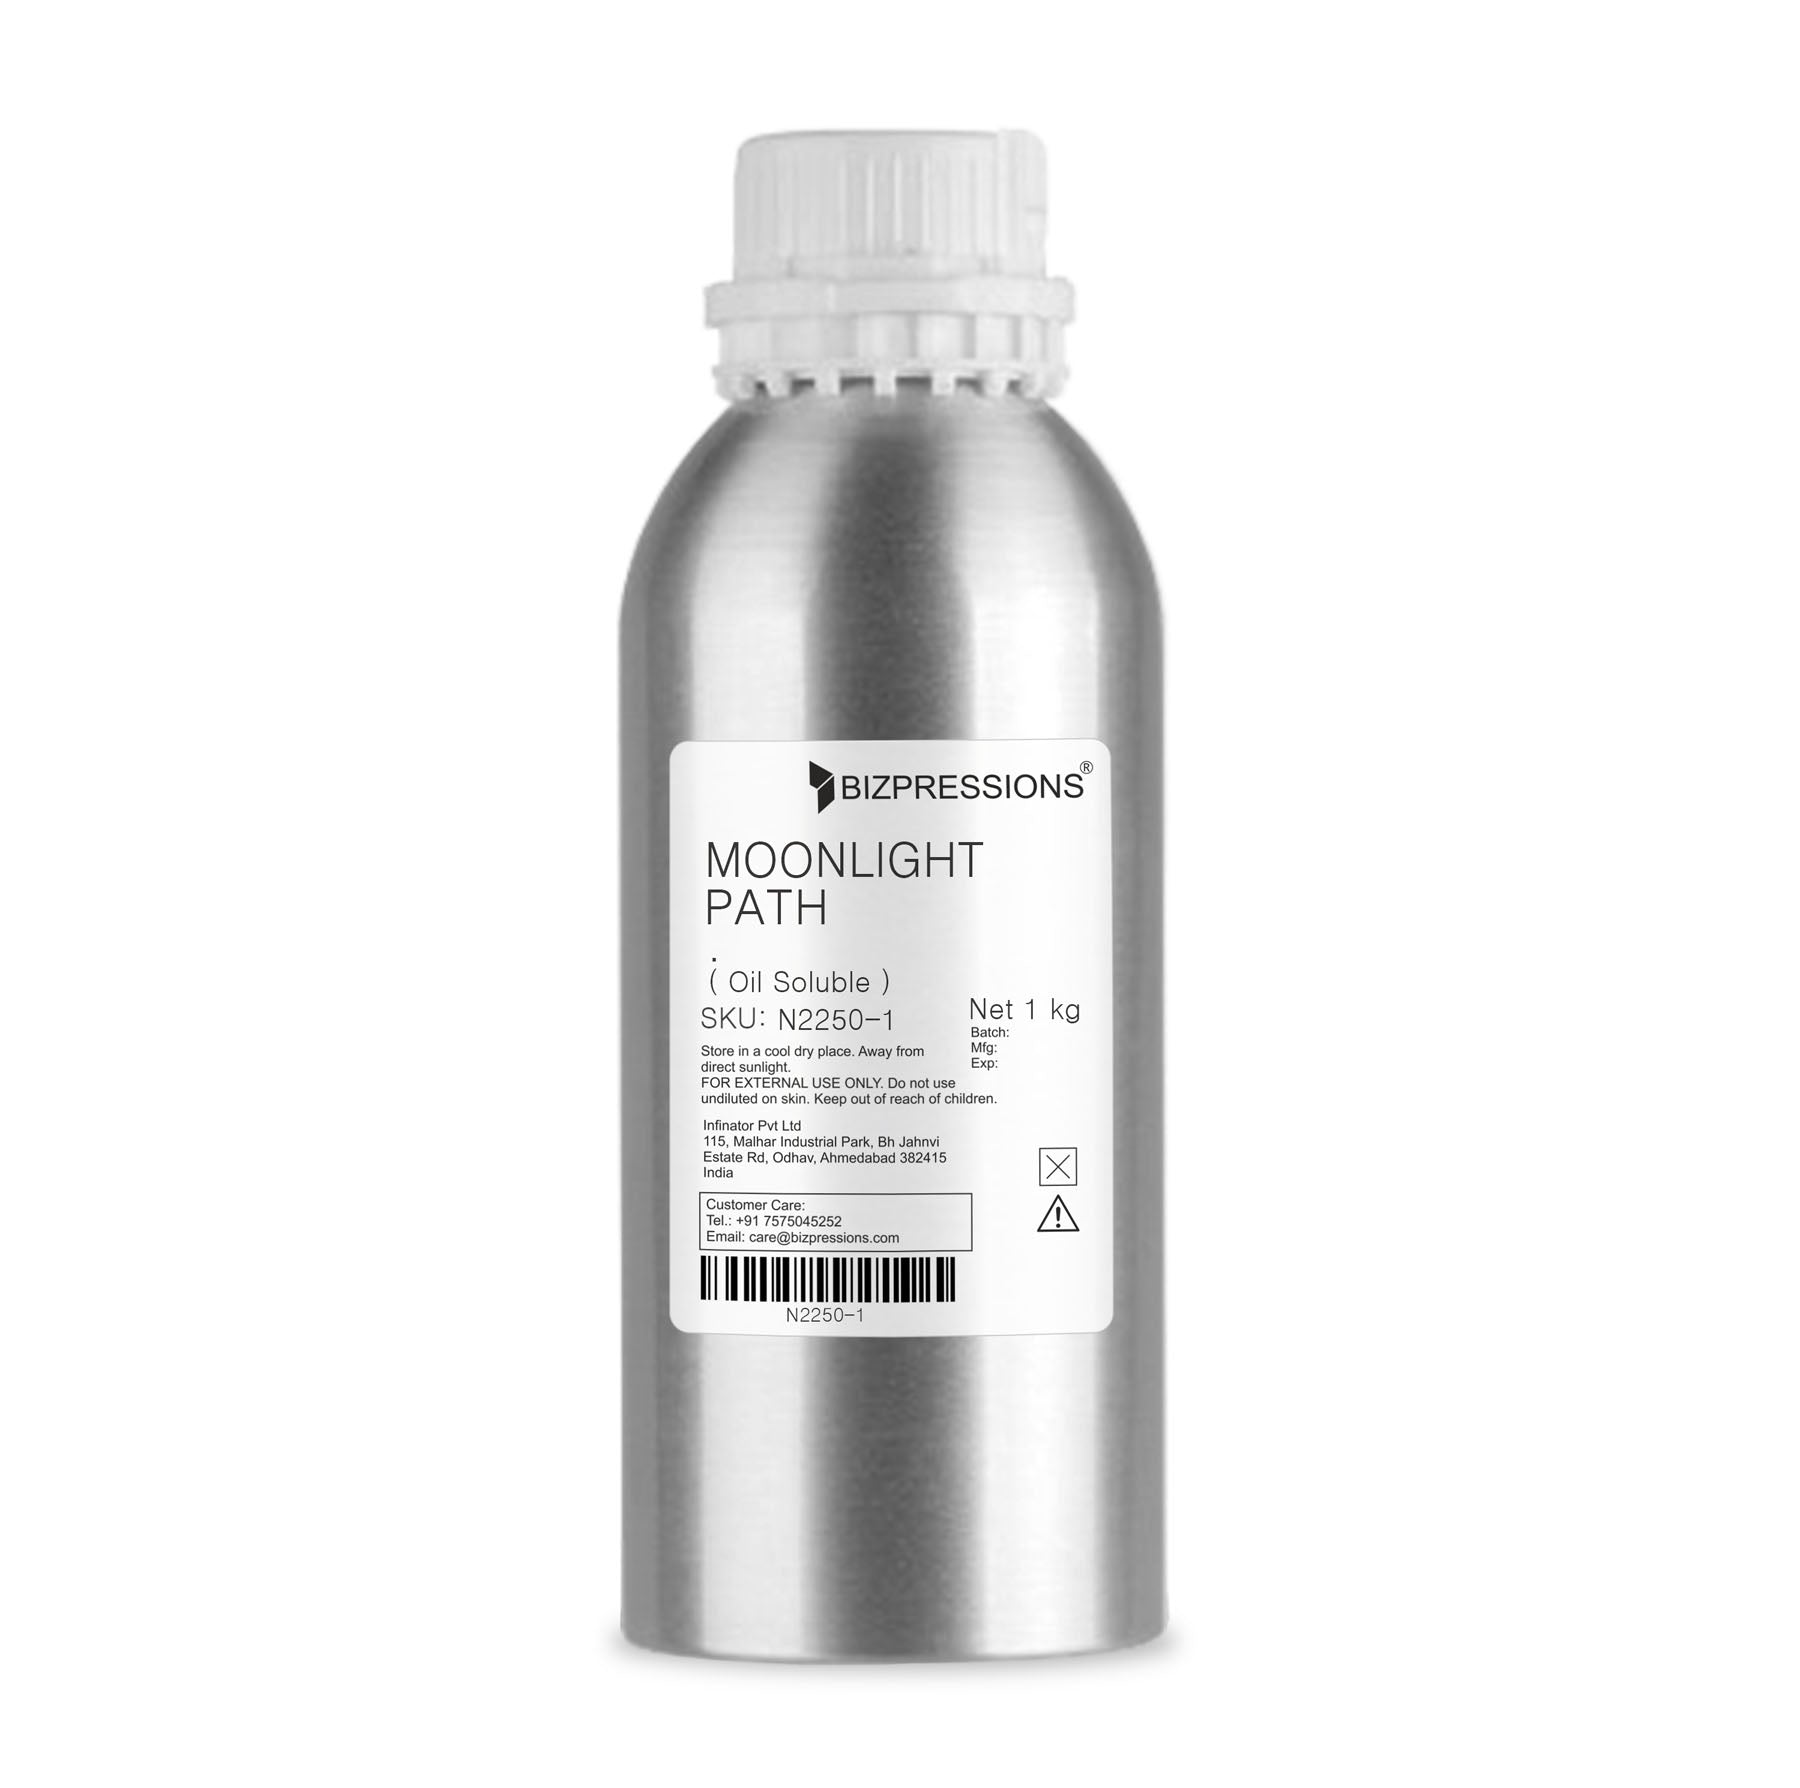 MOONLIGHT PATH - Fragrance ( Oil Soluble ) - 1 kg